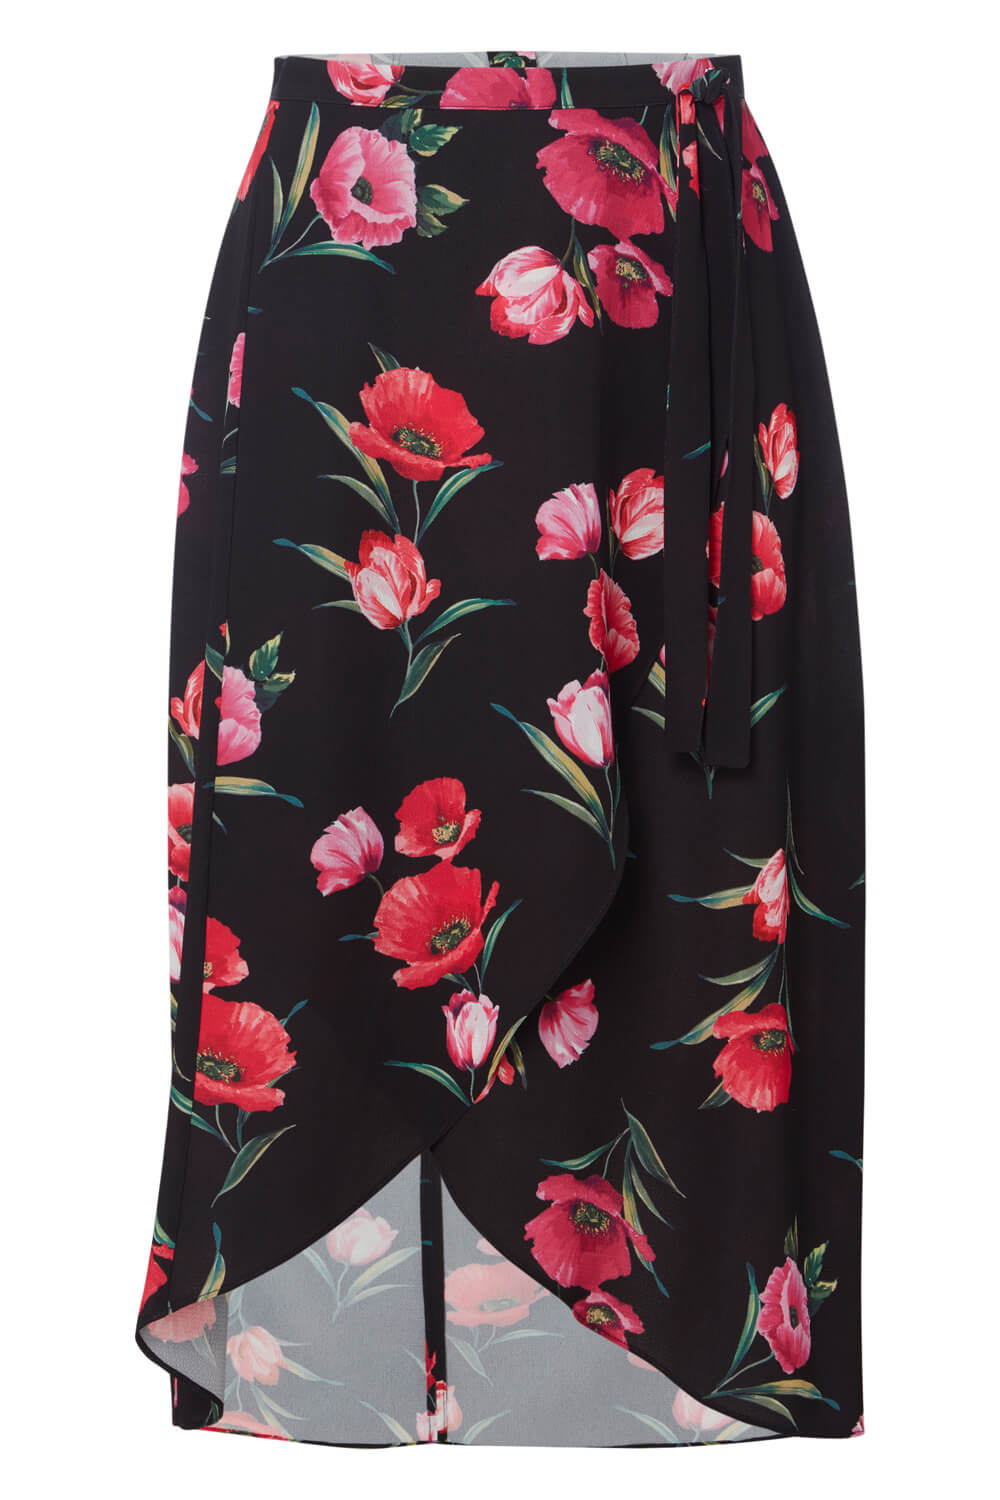 Black Floral Print Wrap Skirt, Image 5 of 5